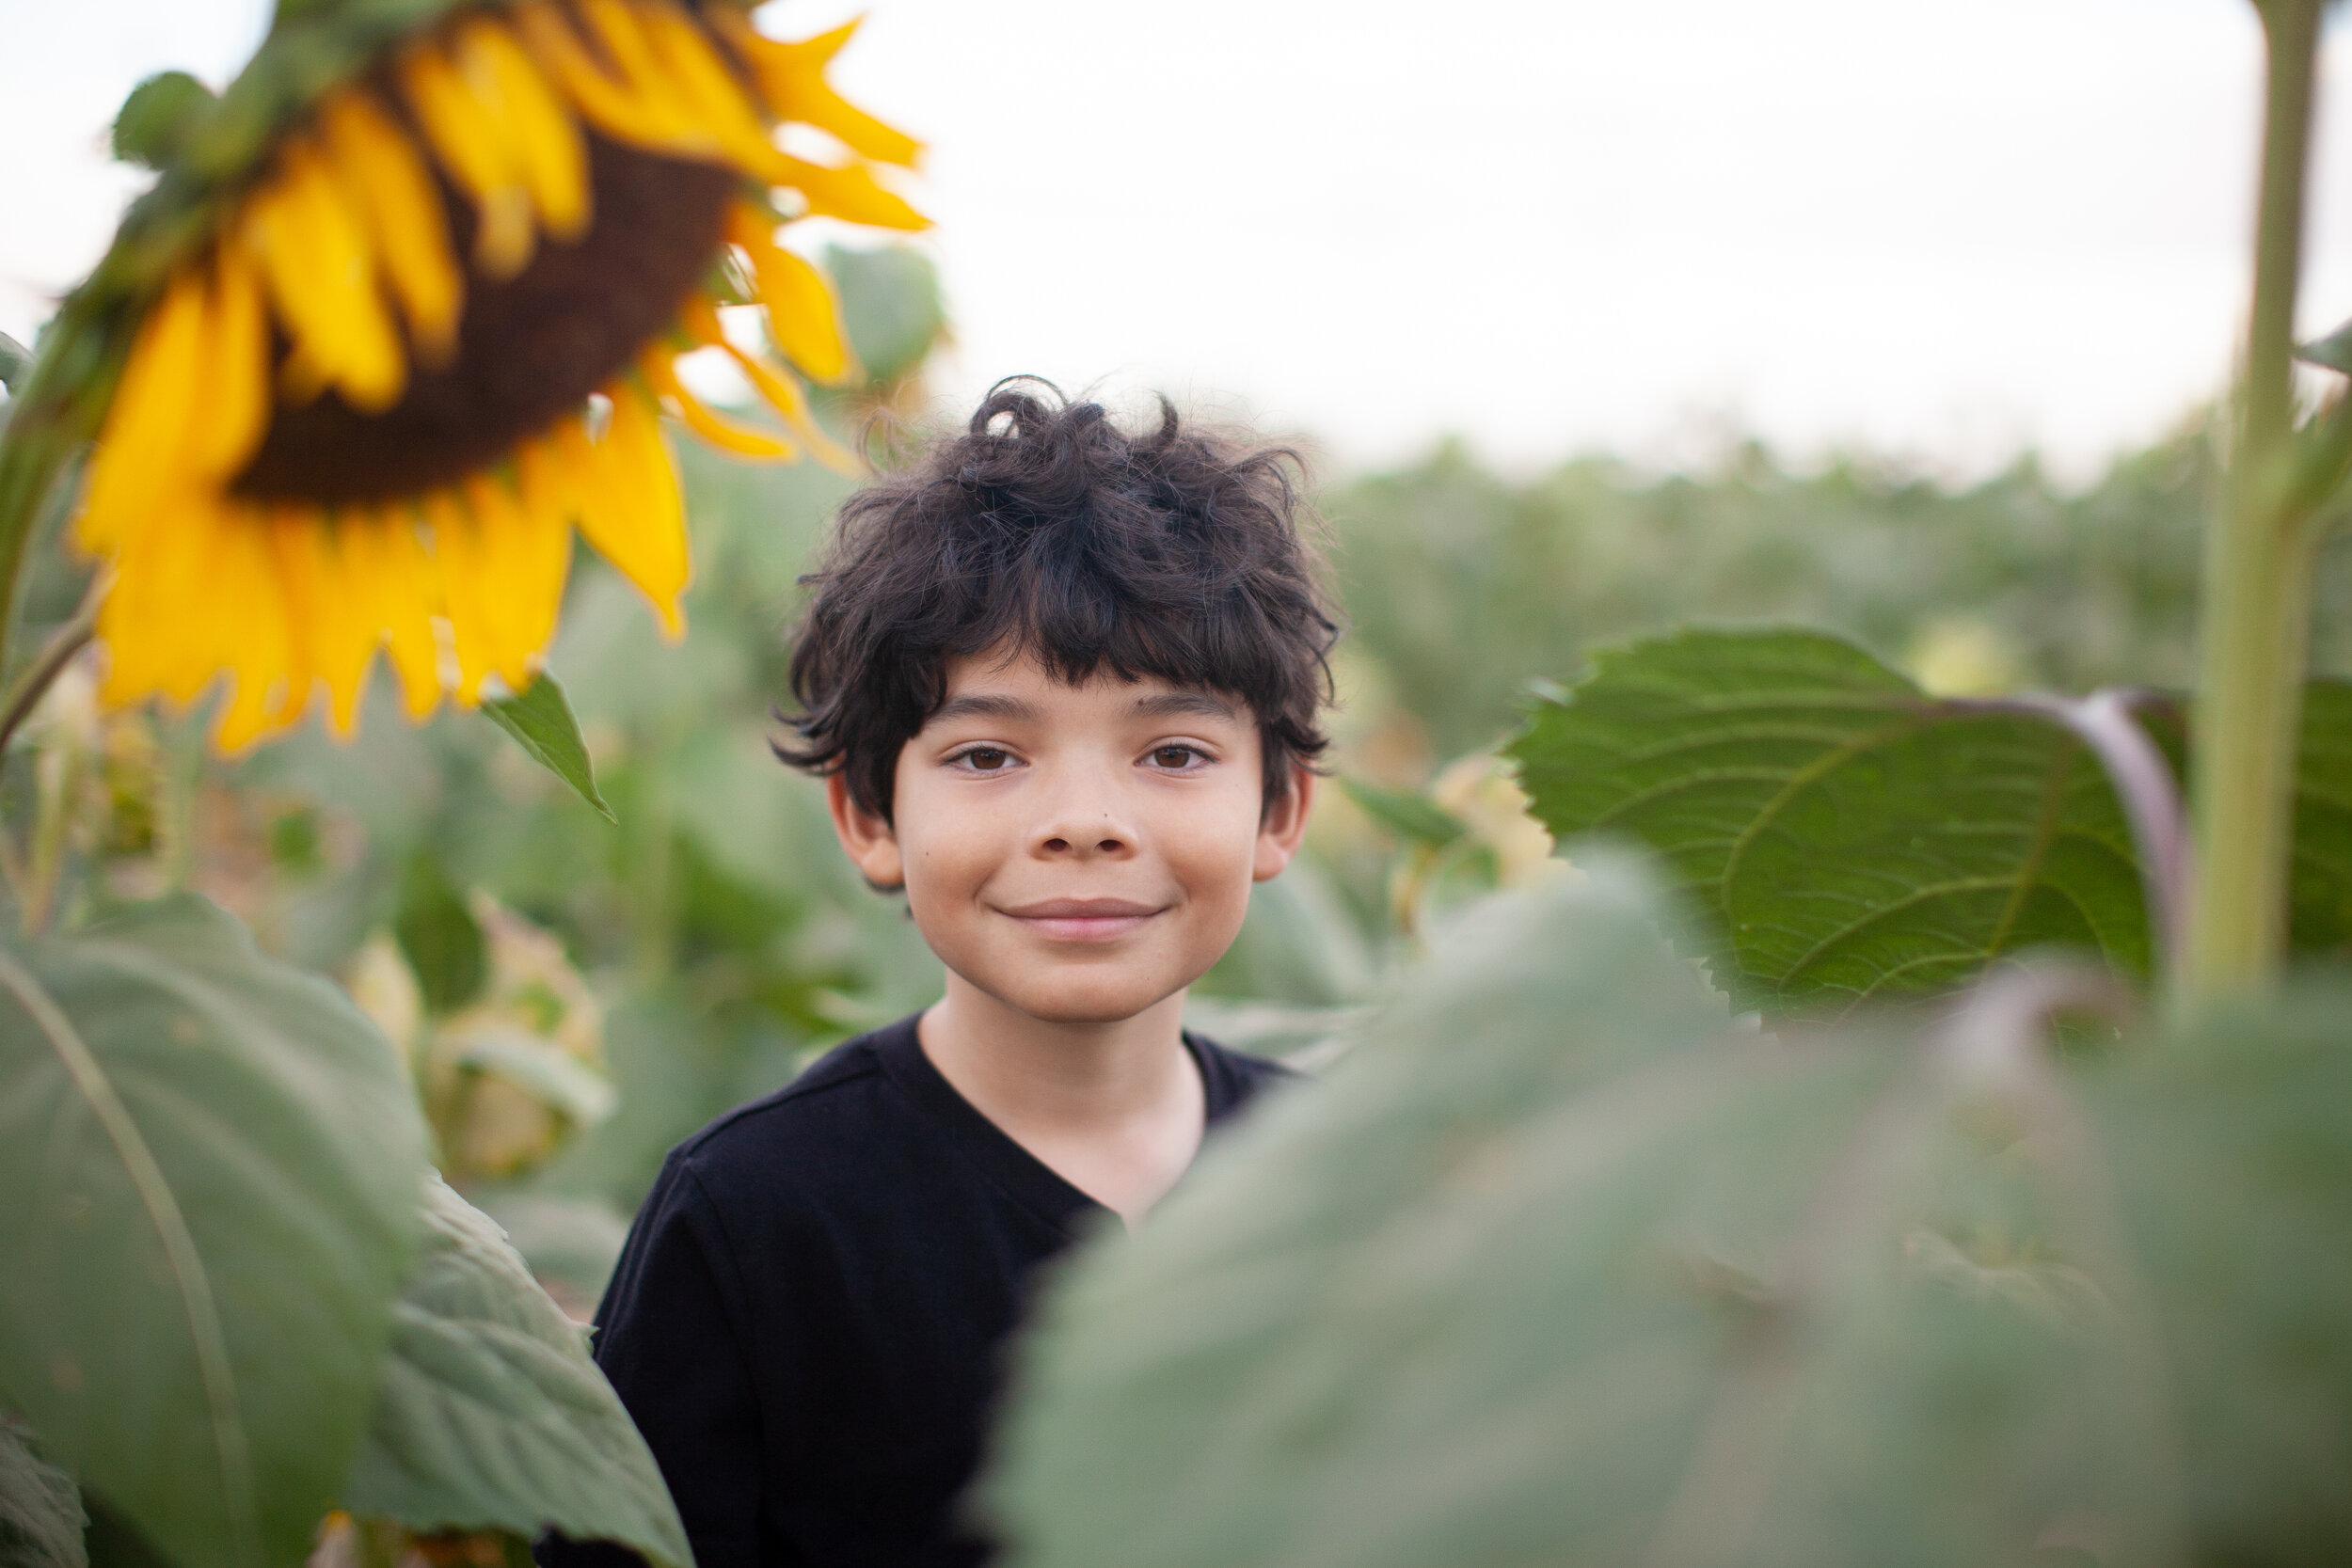 Child portraits at sunflower field in Buckeye, Arizona (Copy)